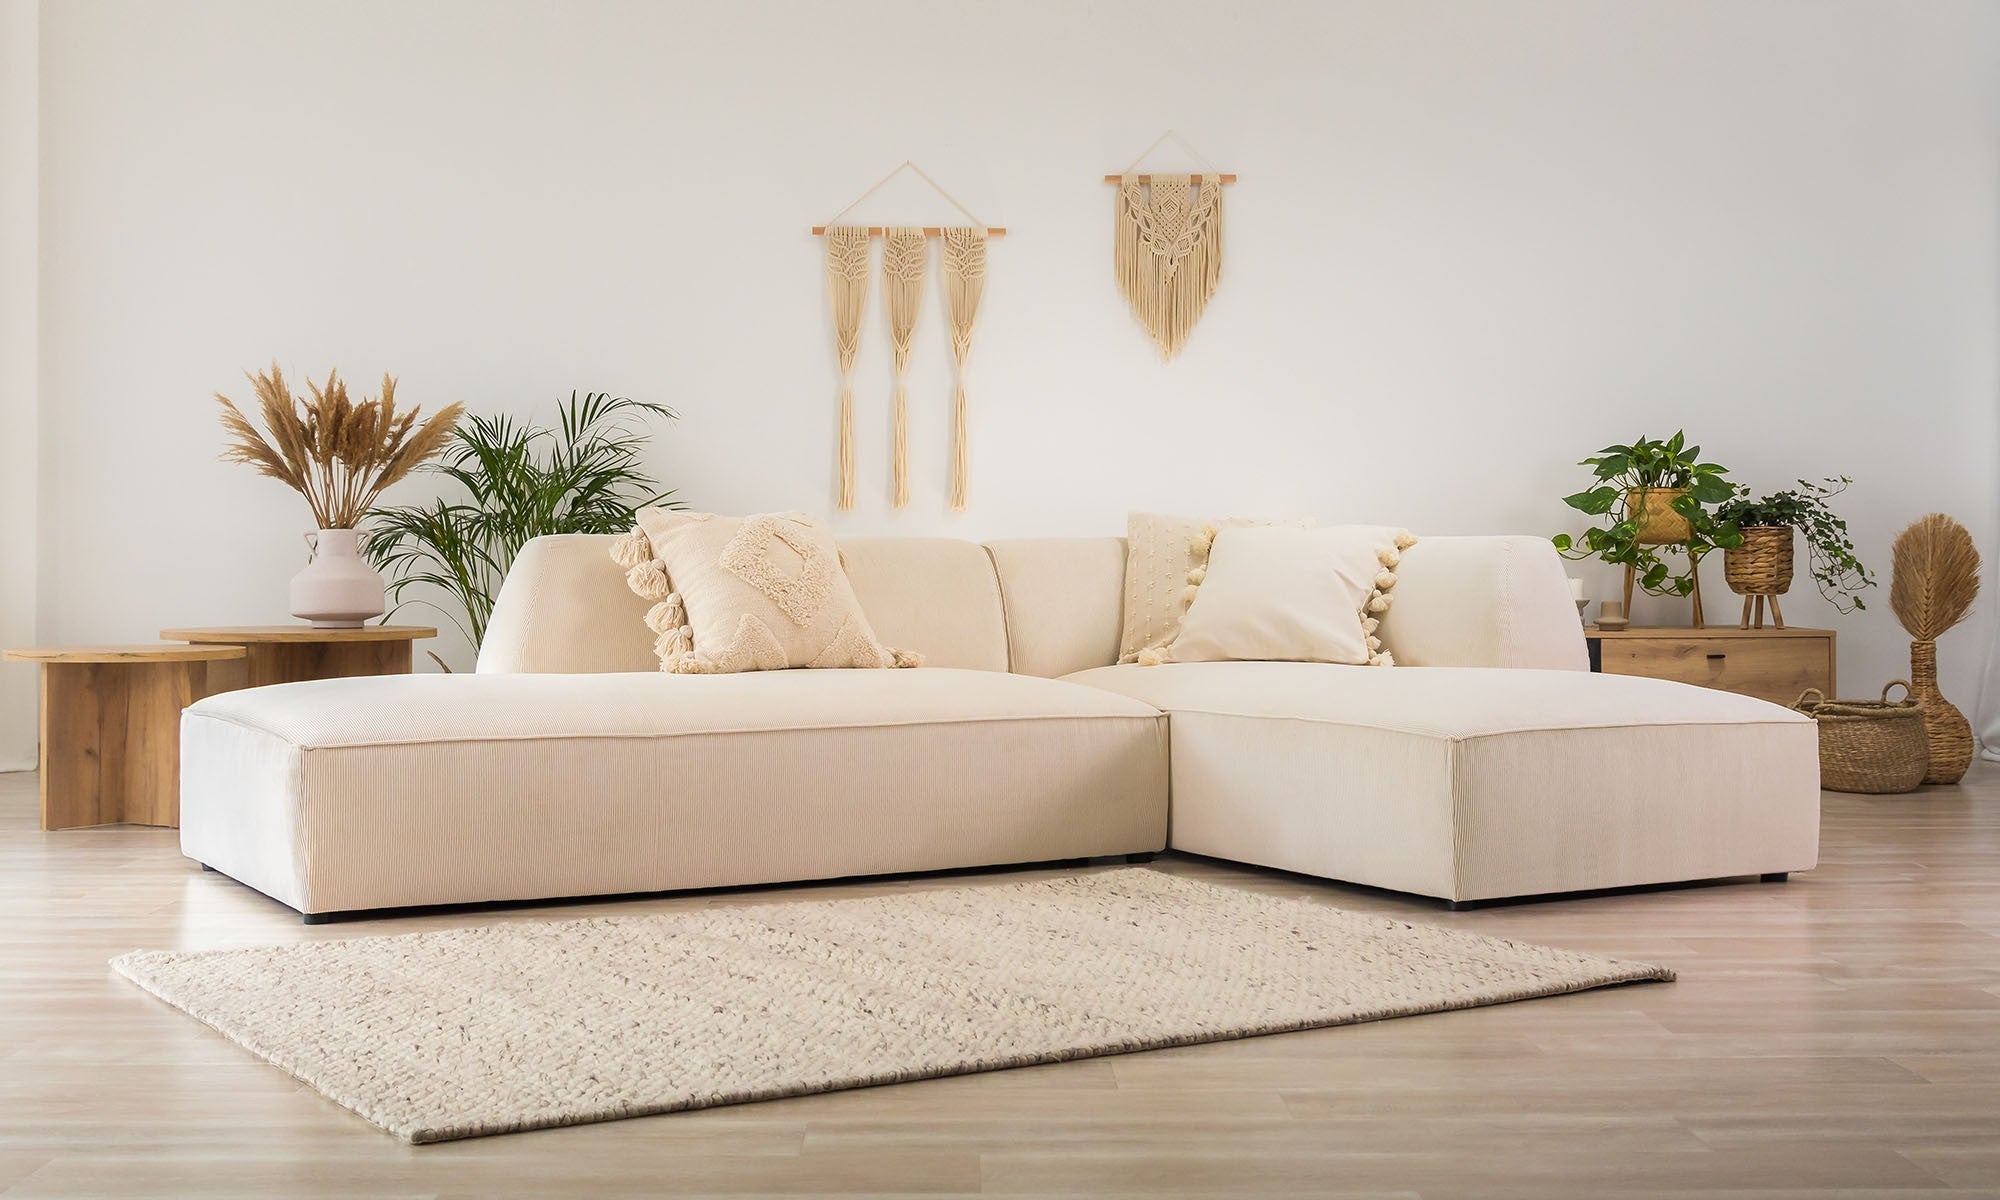 Beige glamor style sofa